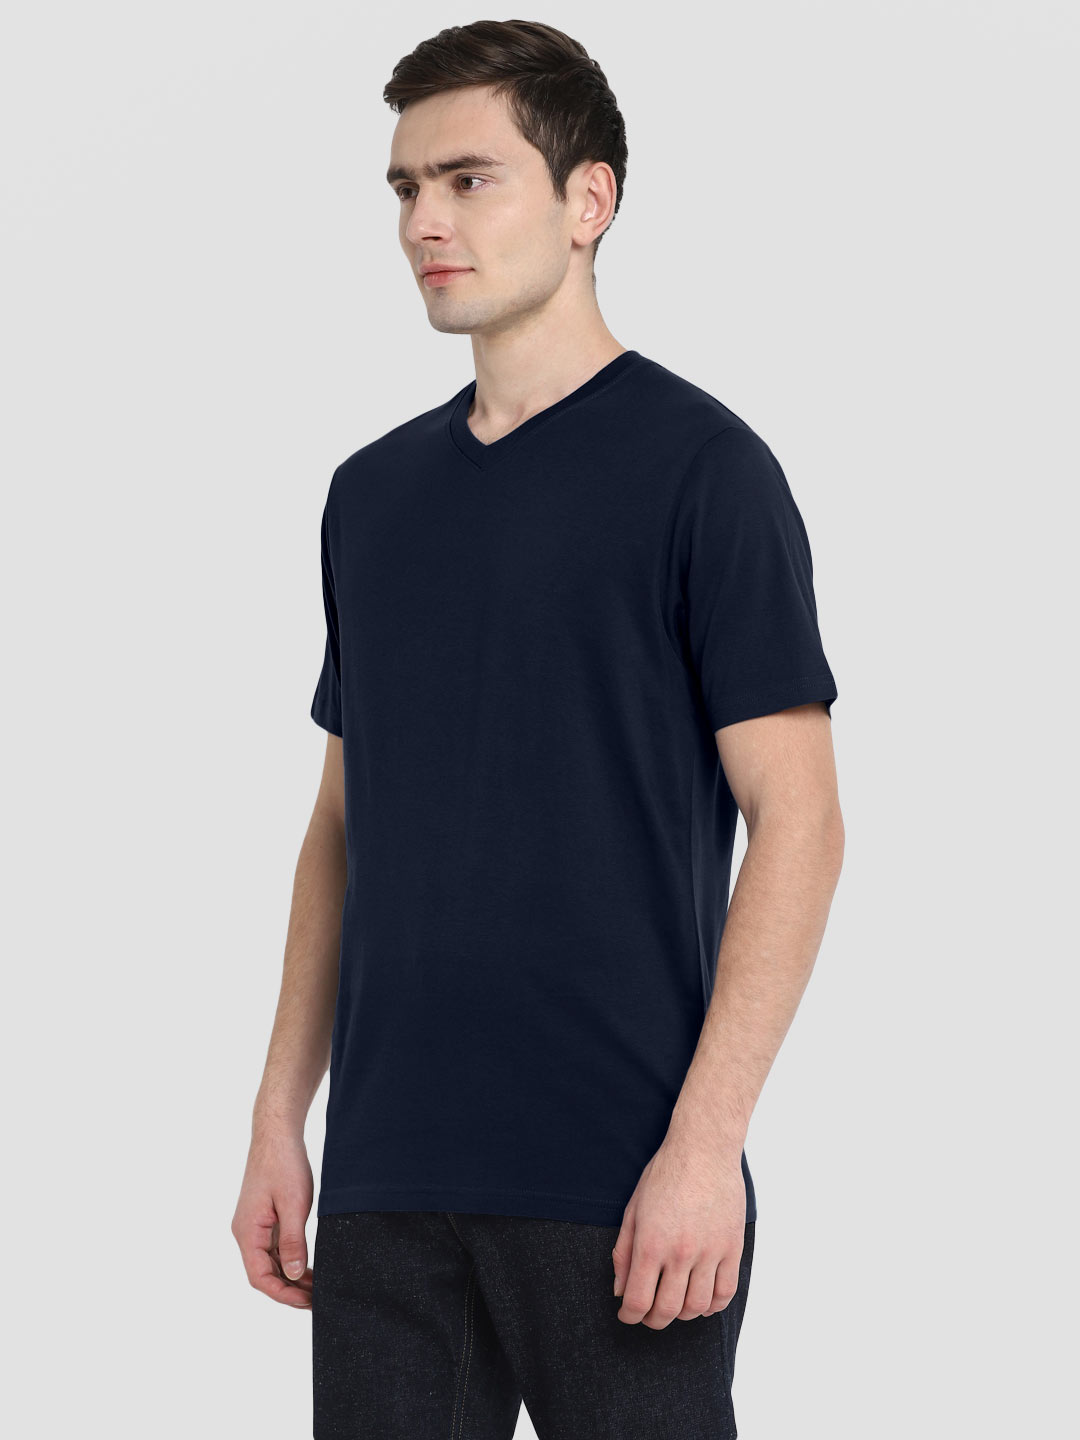 Supima Cotton V Neck T-Shirt for Men - Navy Blue